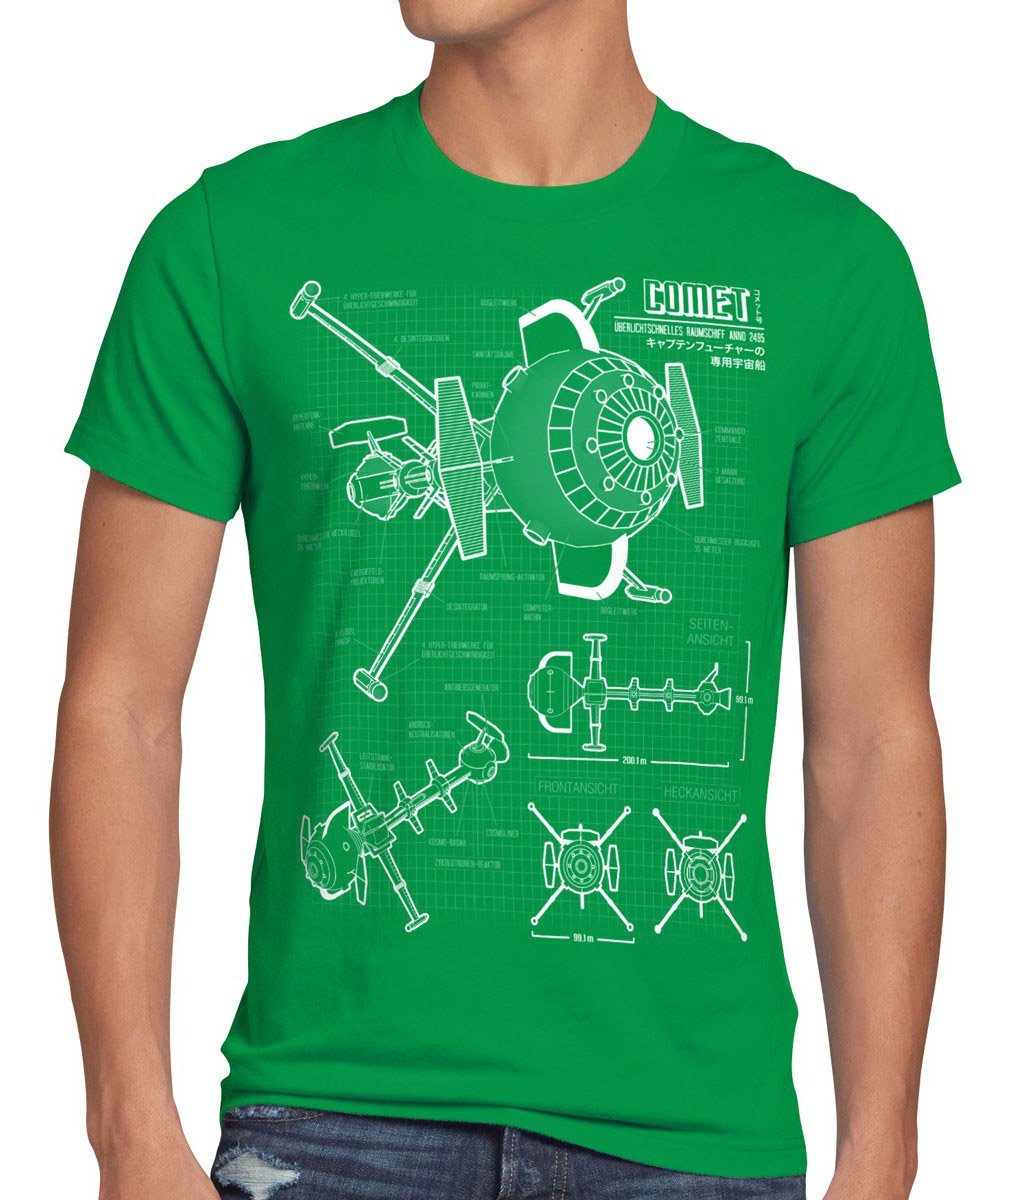 style3 Print-Shirt Herren T-Shirt Future Comet Captain Science Fiction Anime Comic Serie TV blu-ray grün